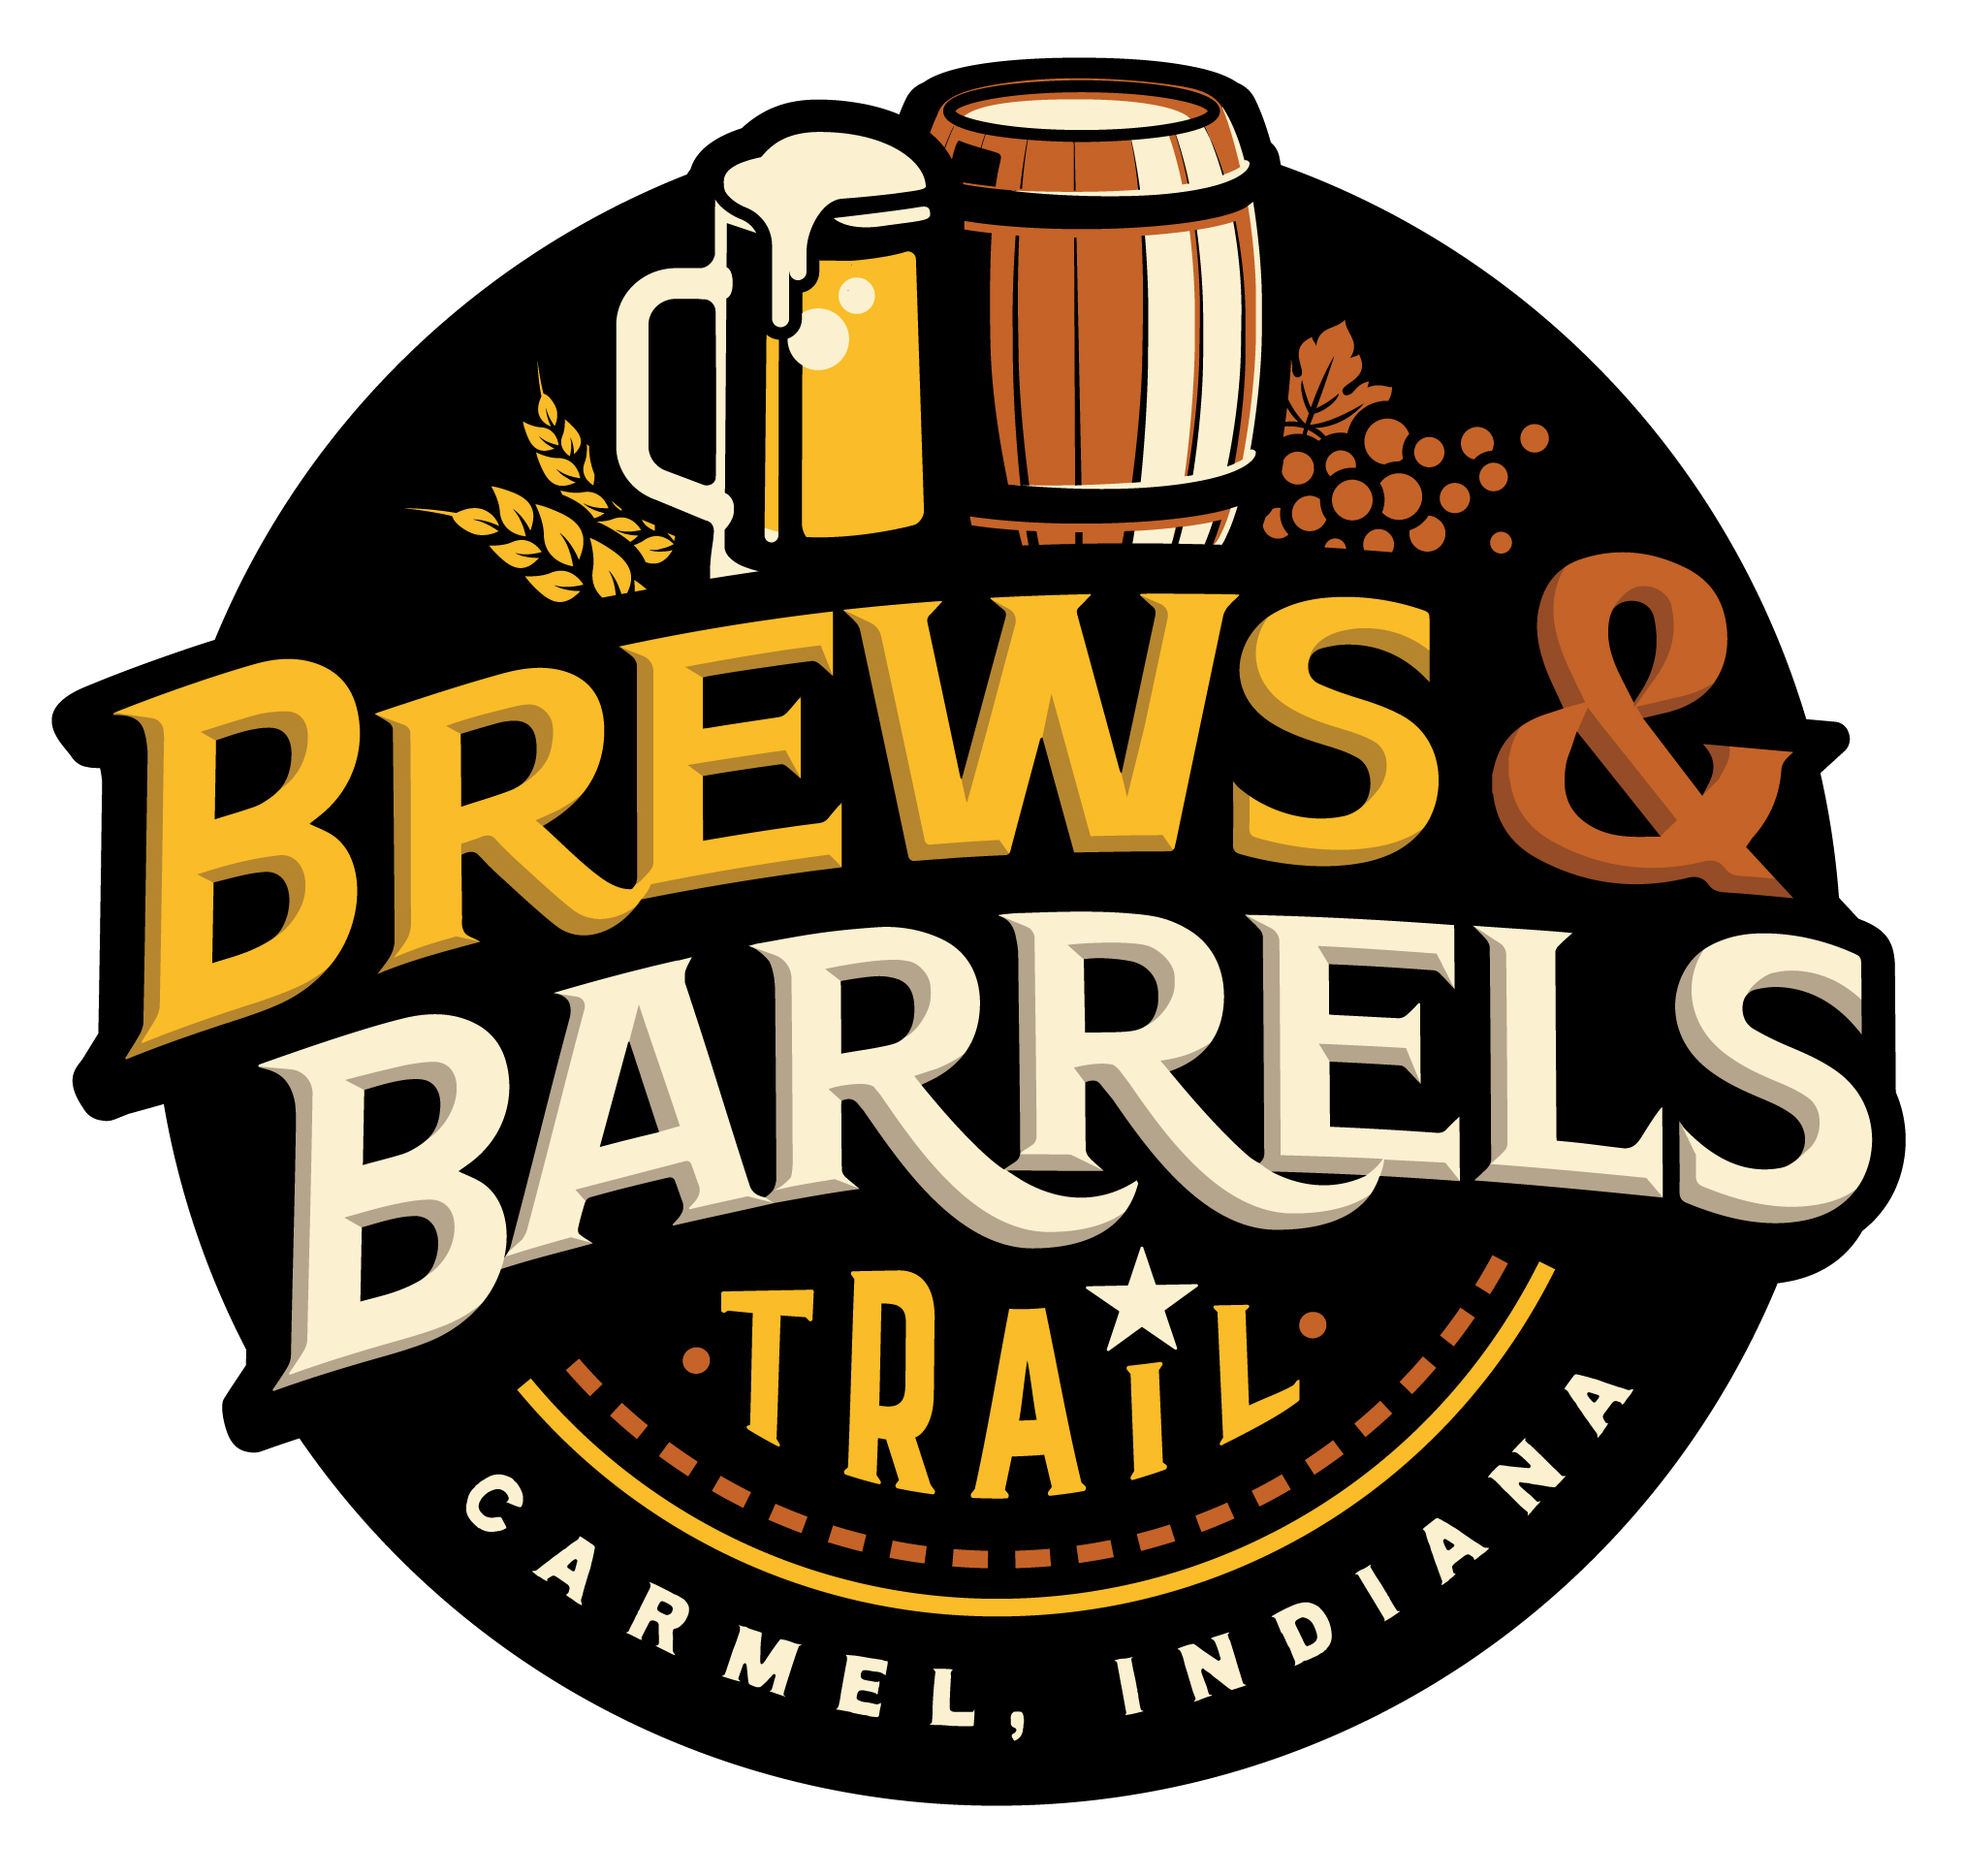 City of Carmel - Brews and Barrels Trail